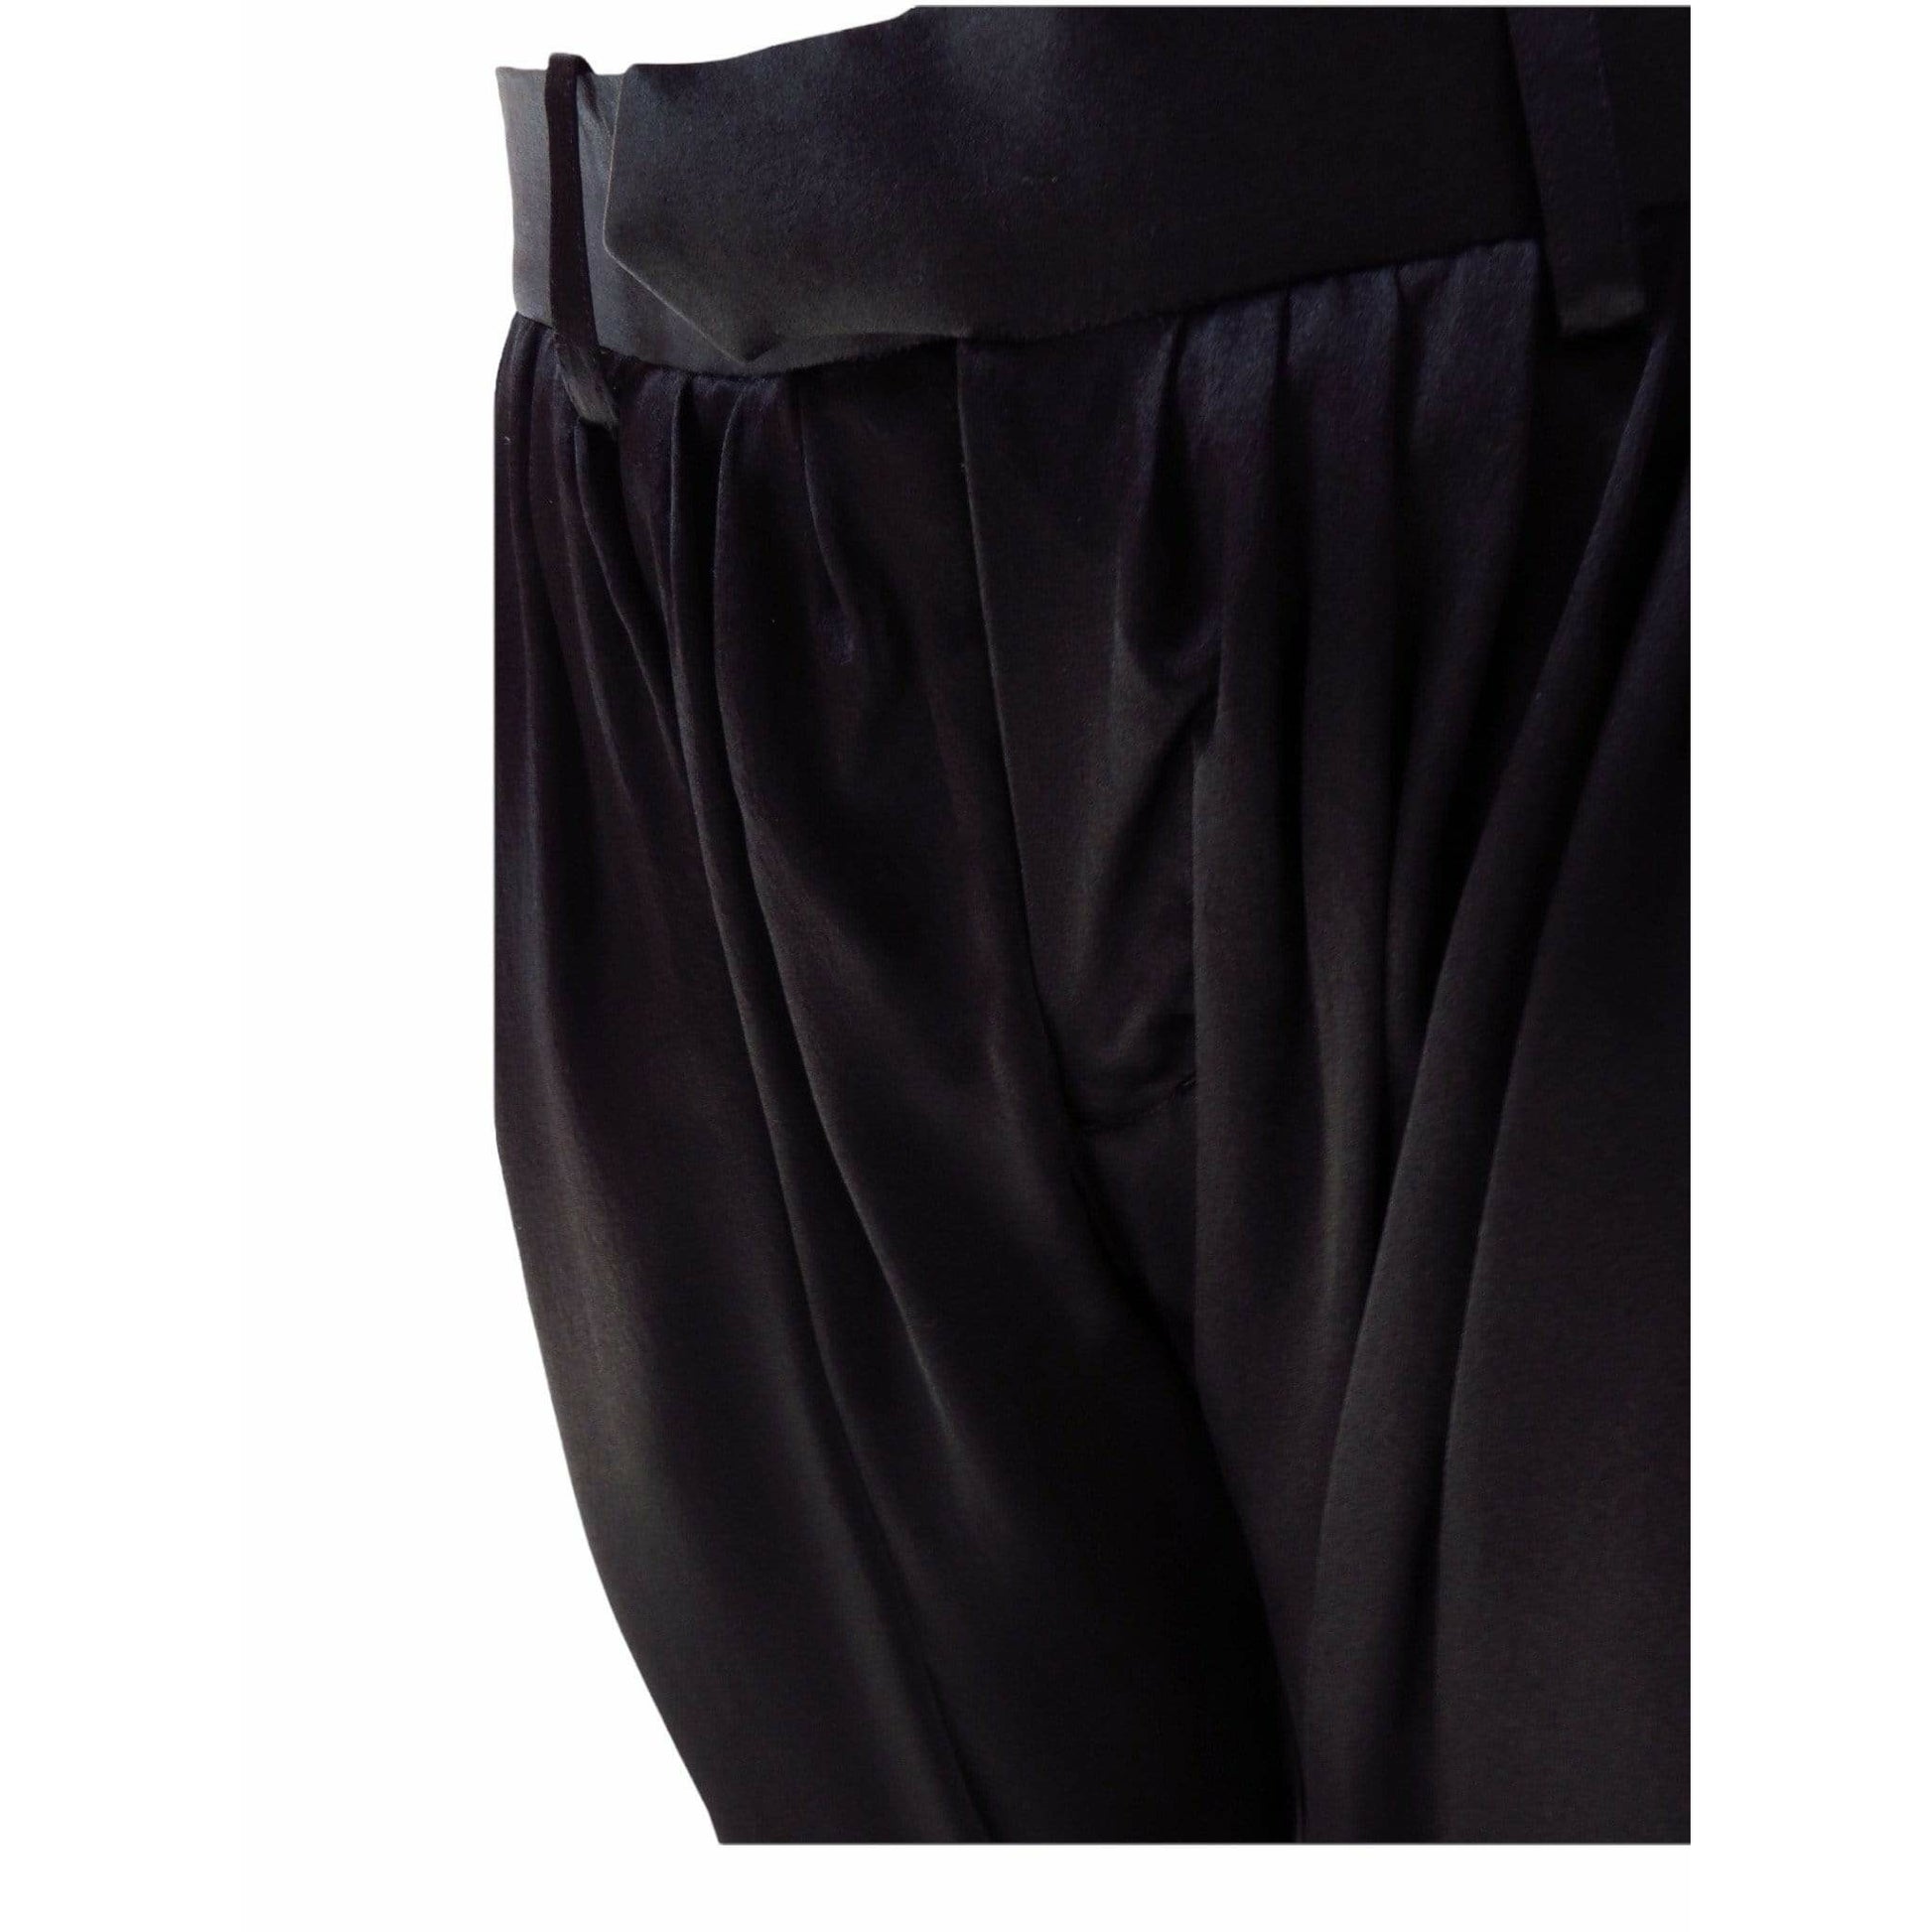 Pants undercover-black-pleated-silk-harem-pants Black